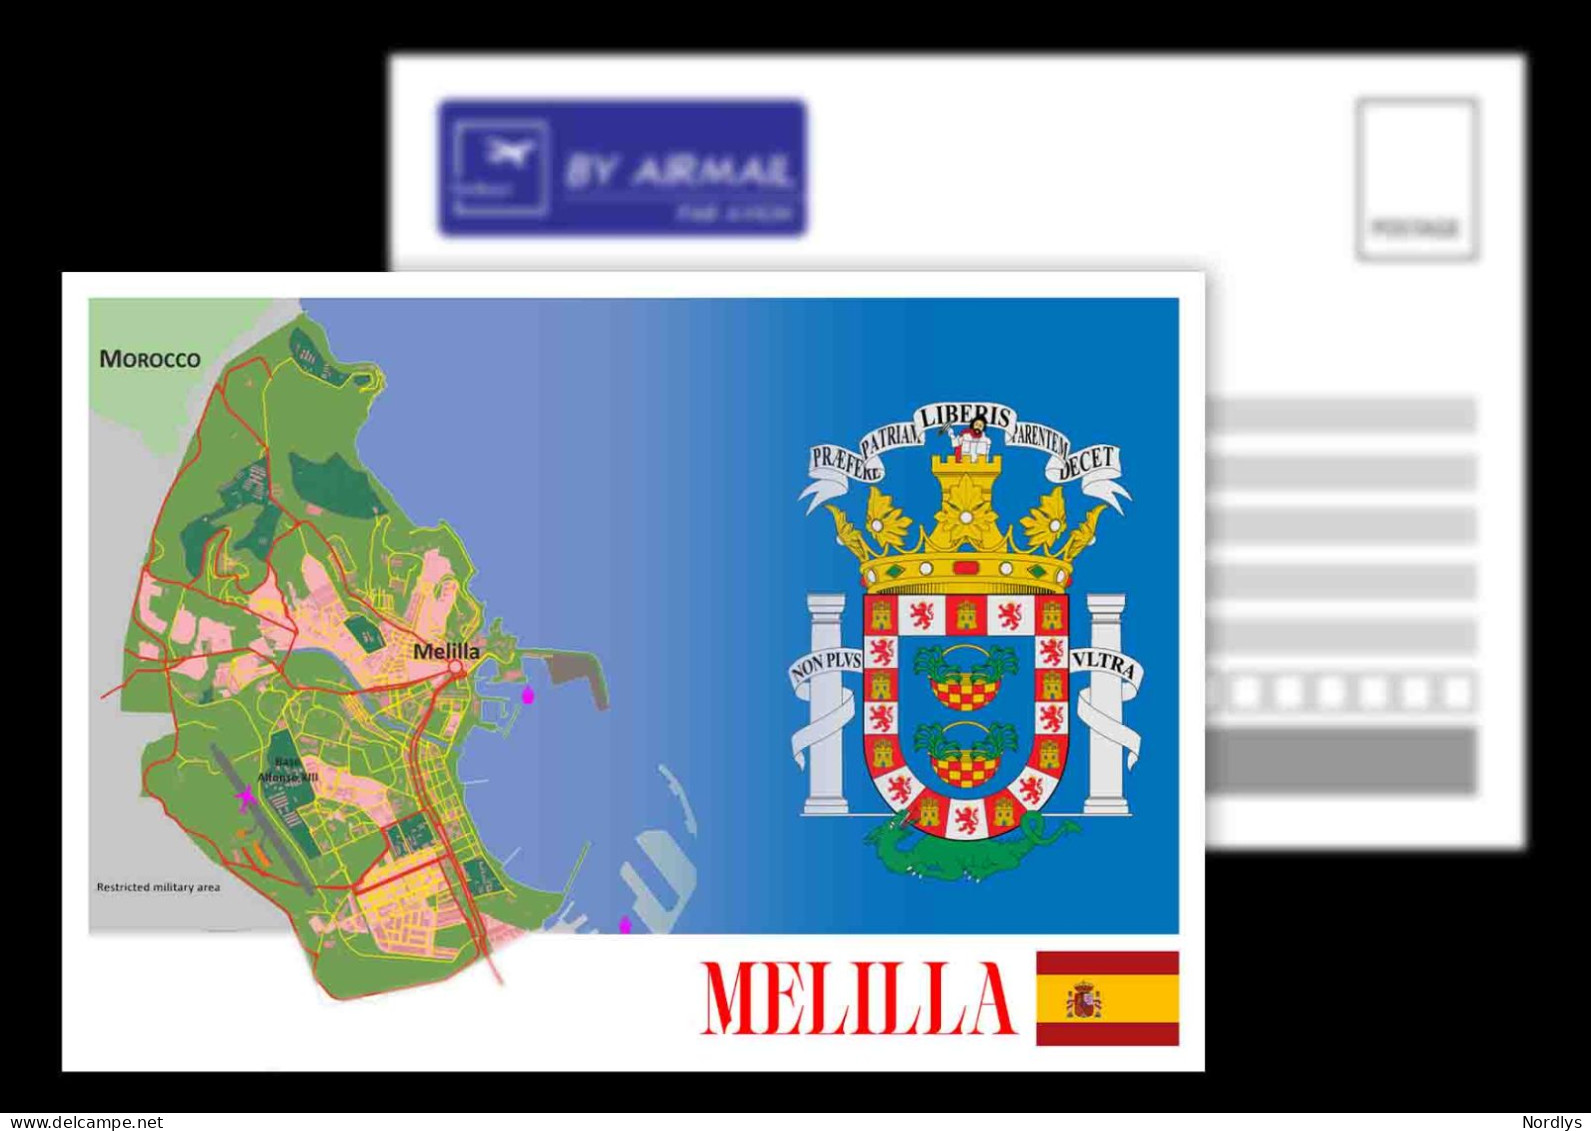 Melilla / Spain / Postcard / View Card / Map Card - Melilla